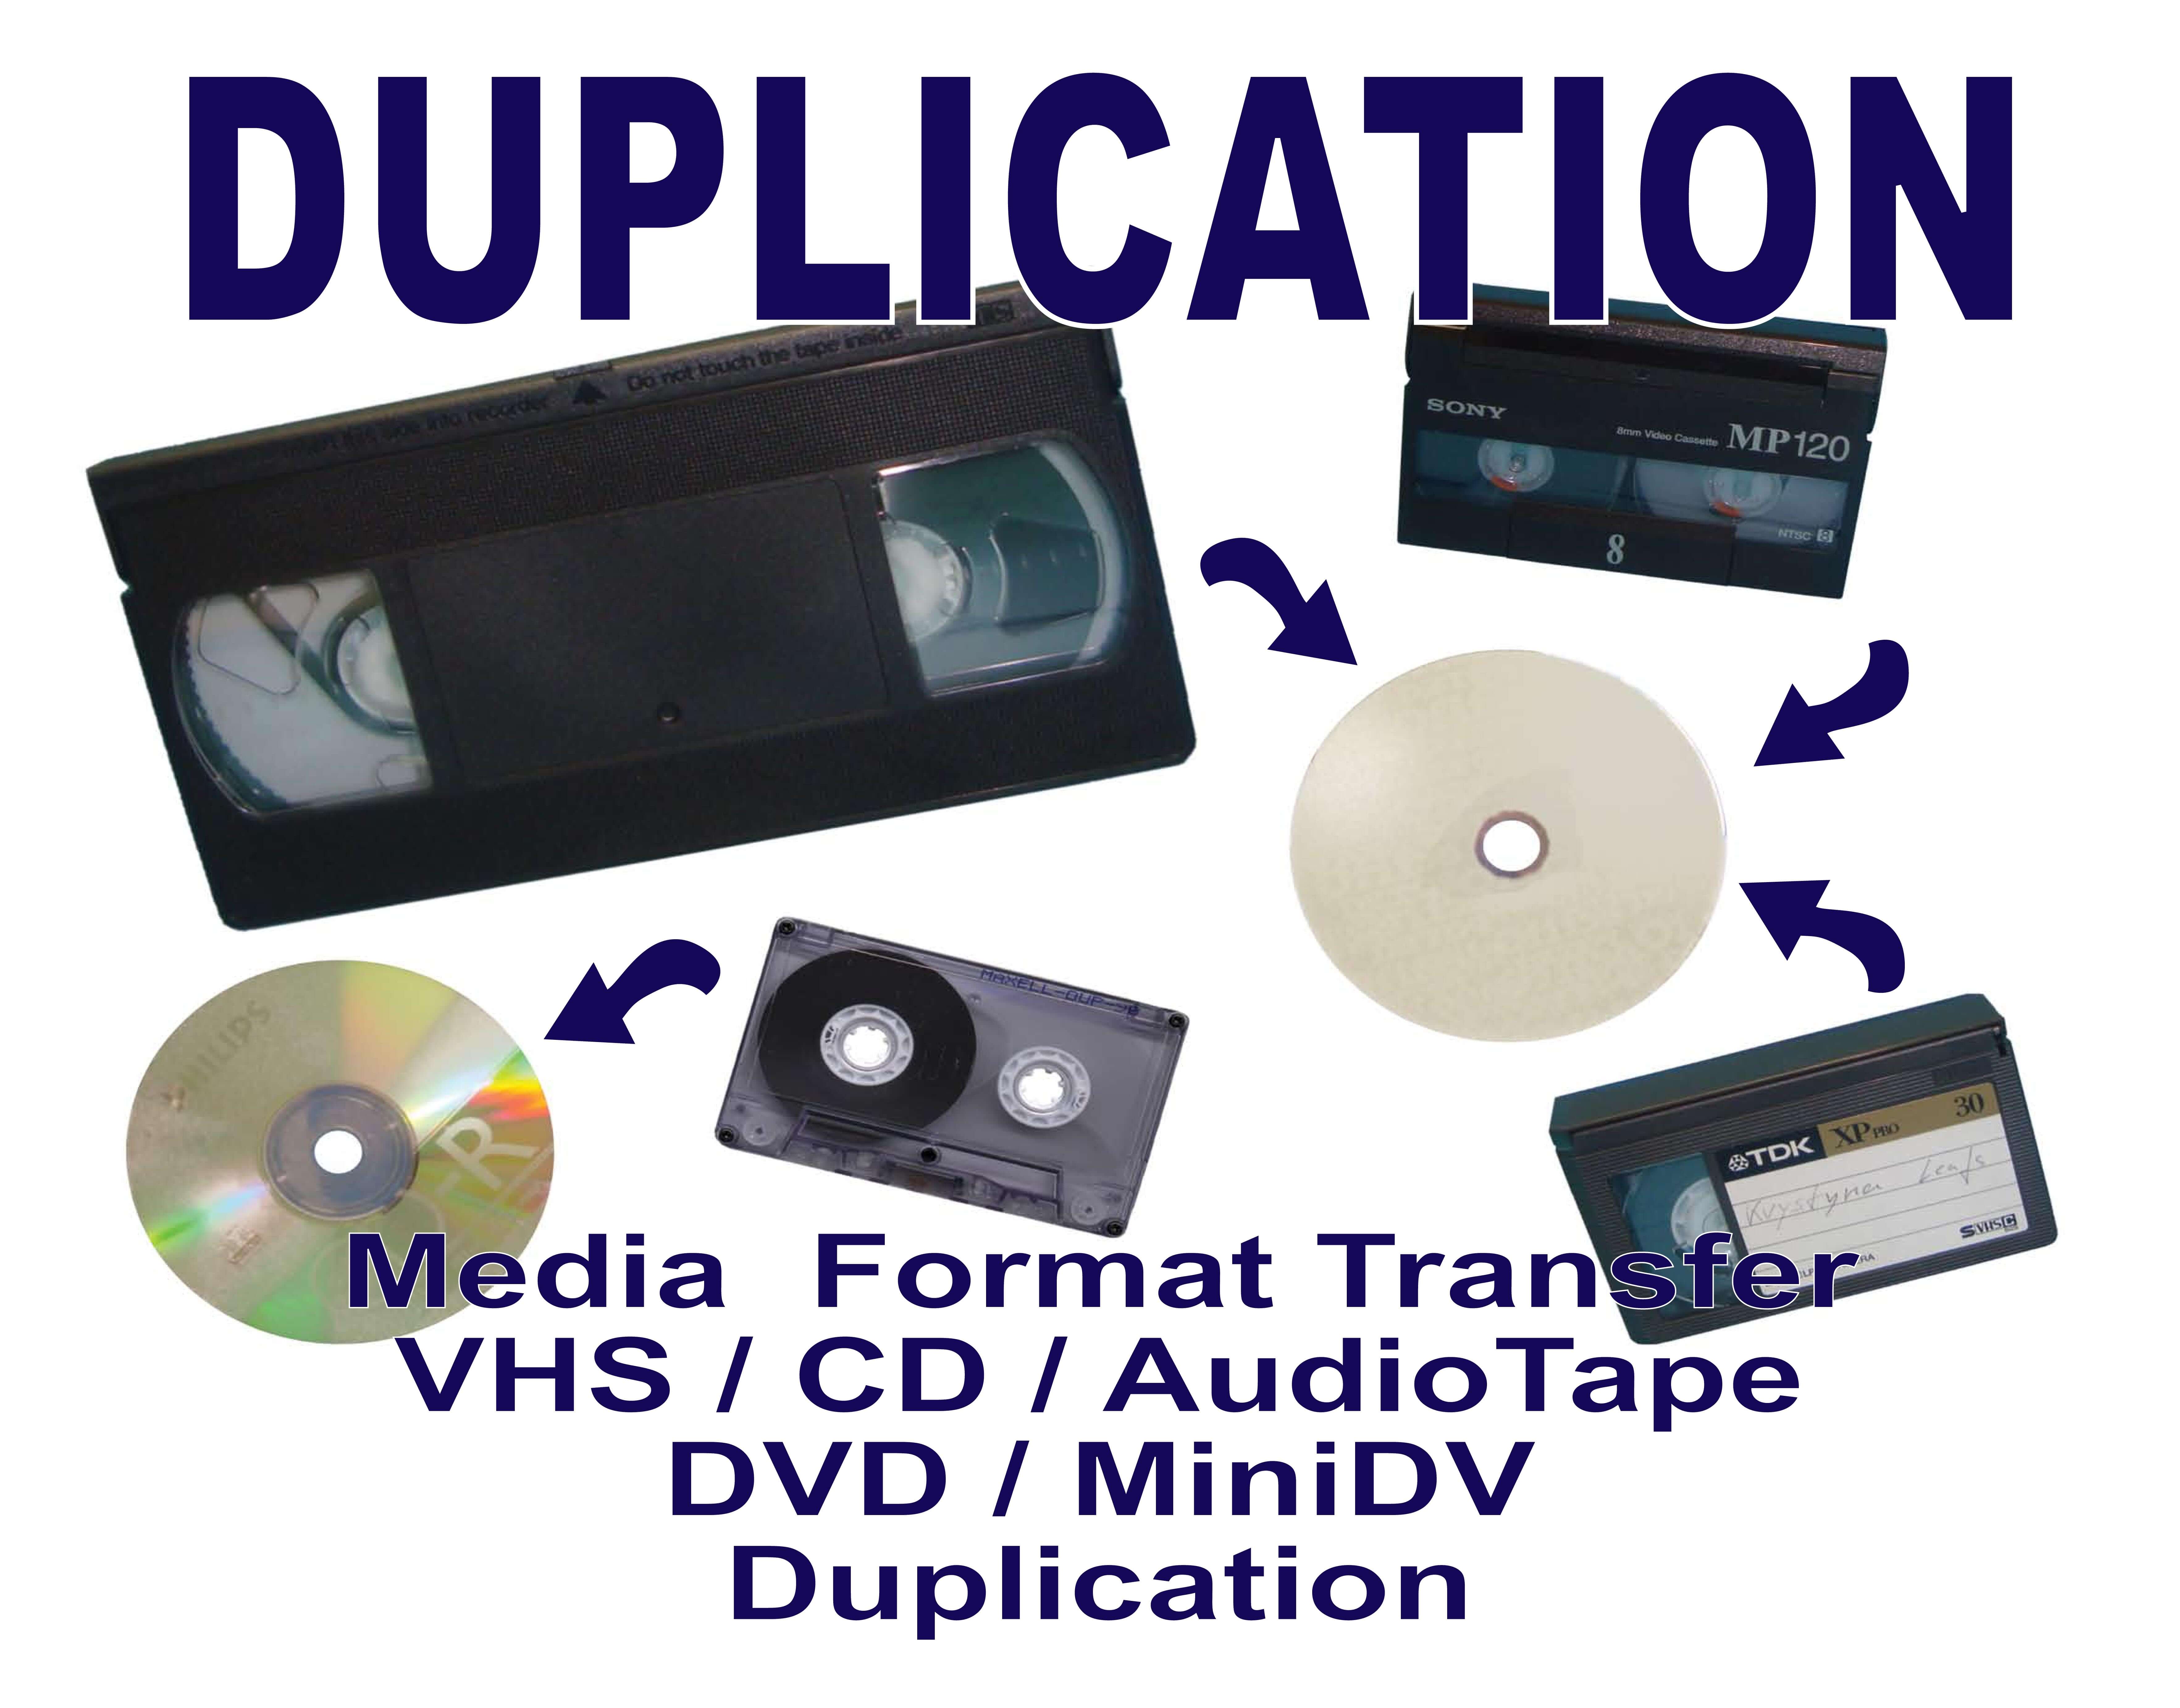 CD / DVD Duplication